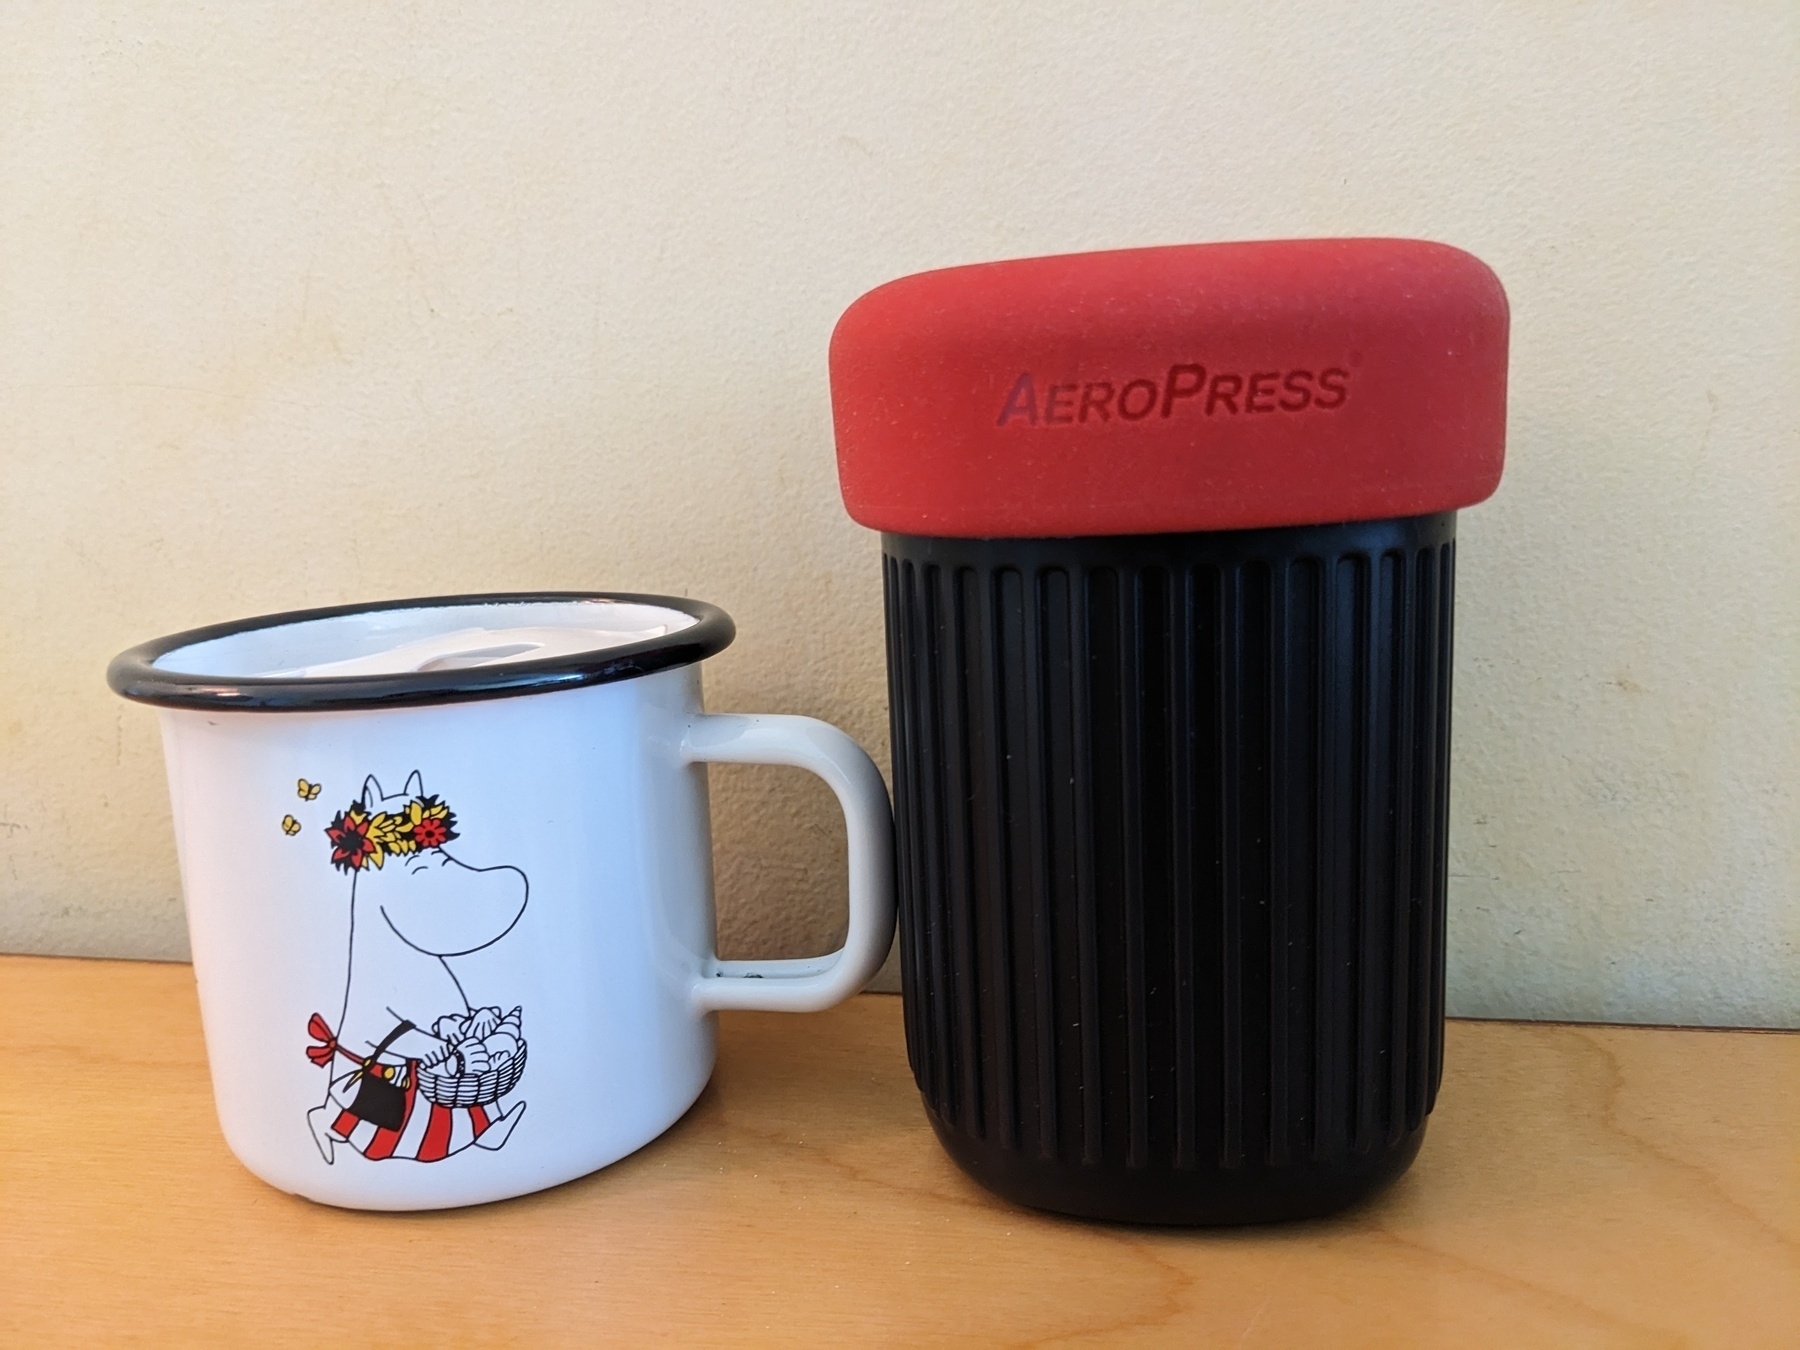 coffee mug next to Aeropress travel coffee maker